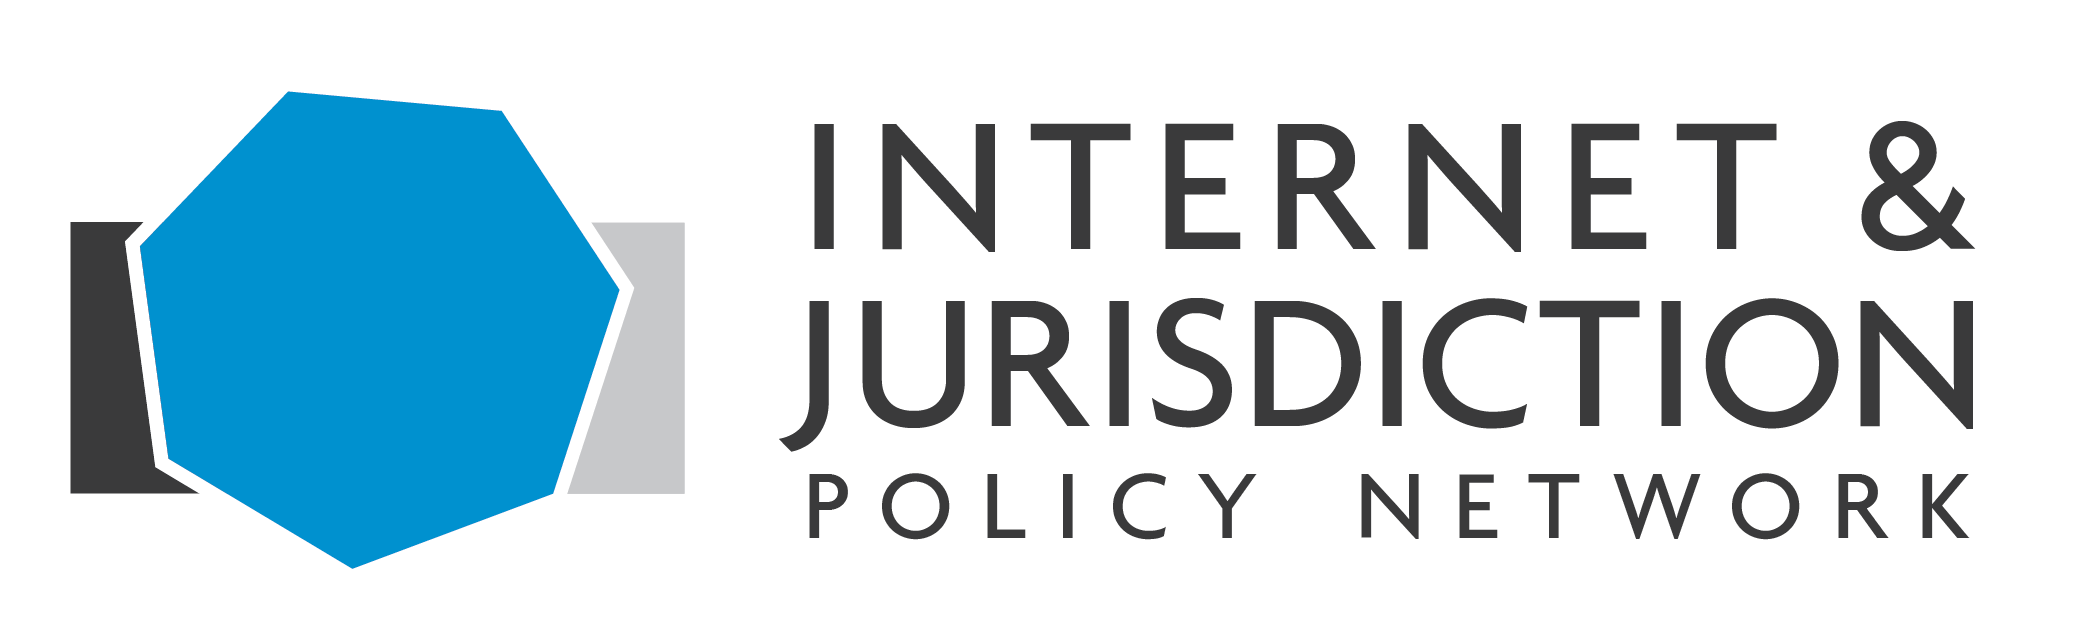 Internet Network Logo - Internet & Jurisdiction Multistakeholder Policy Network Logo